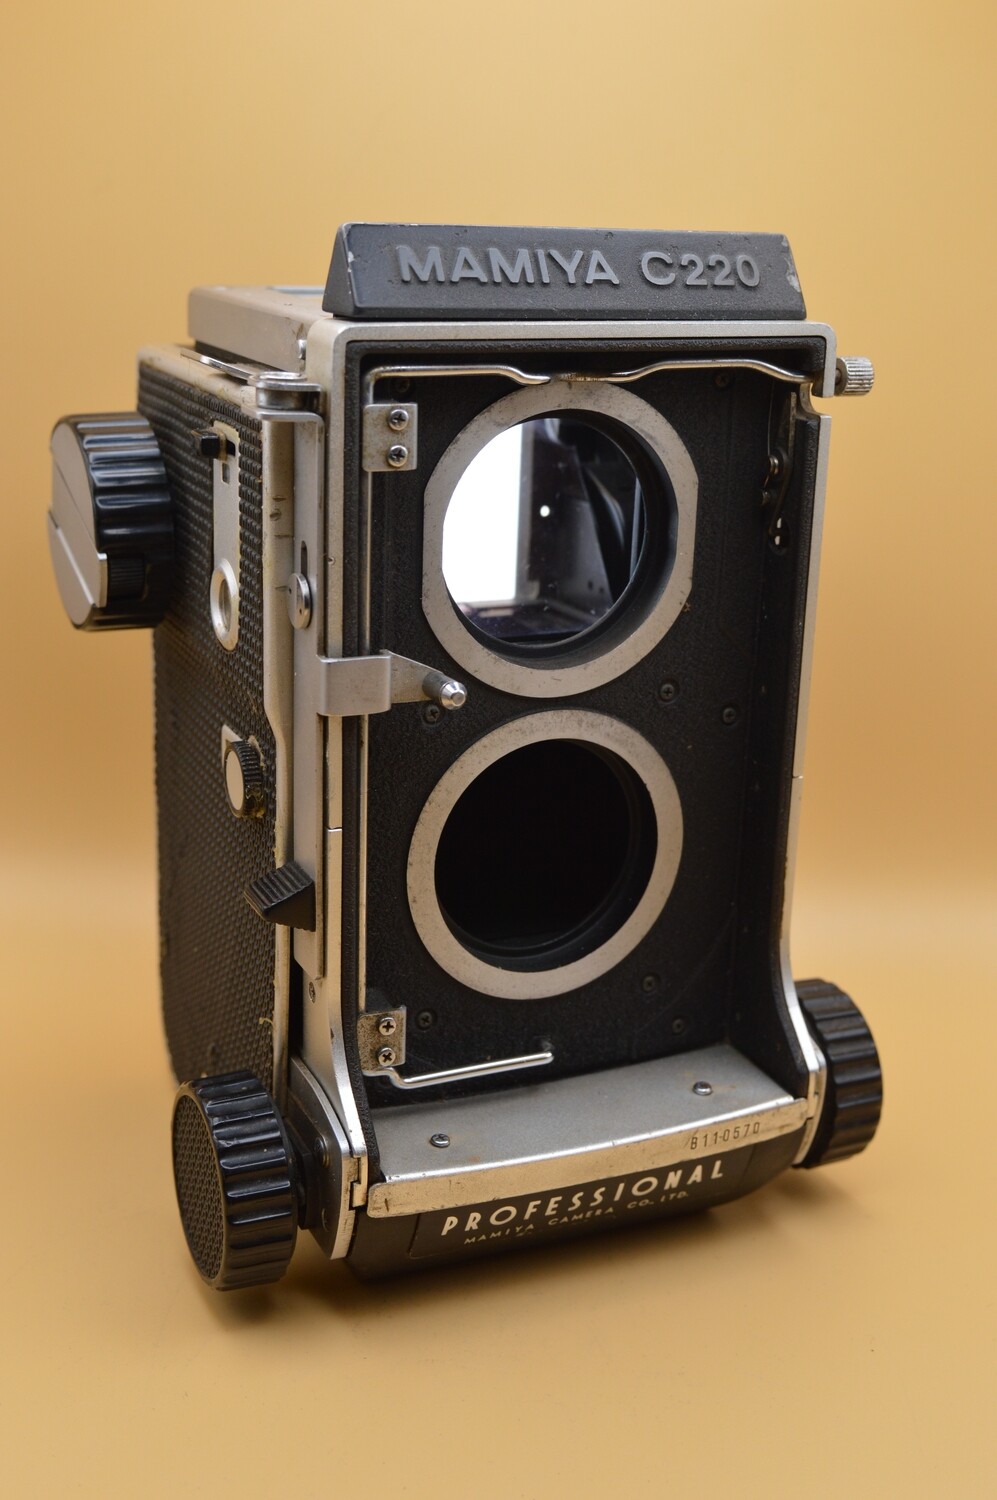 Mamiya C220 Pro Camera body SR. 110570 AS is